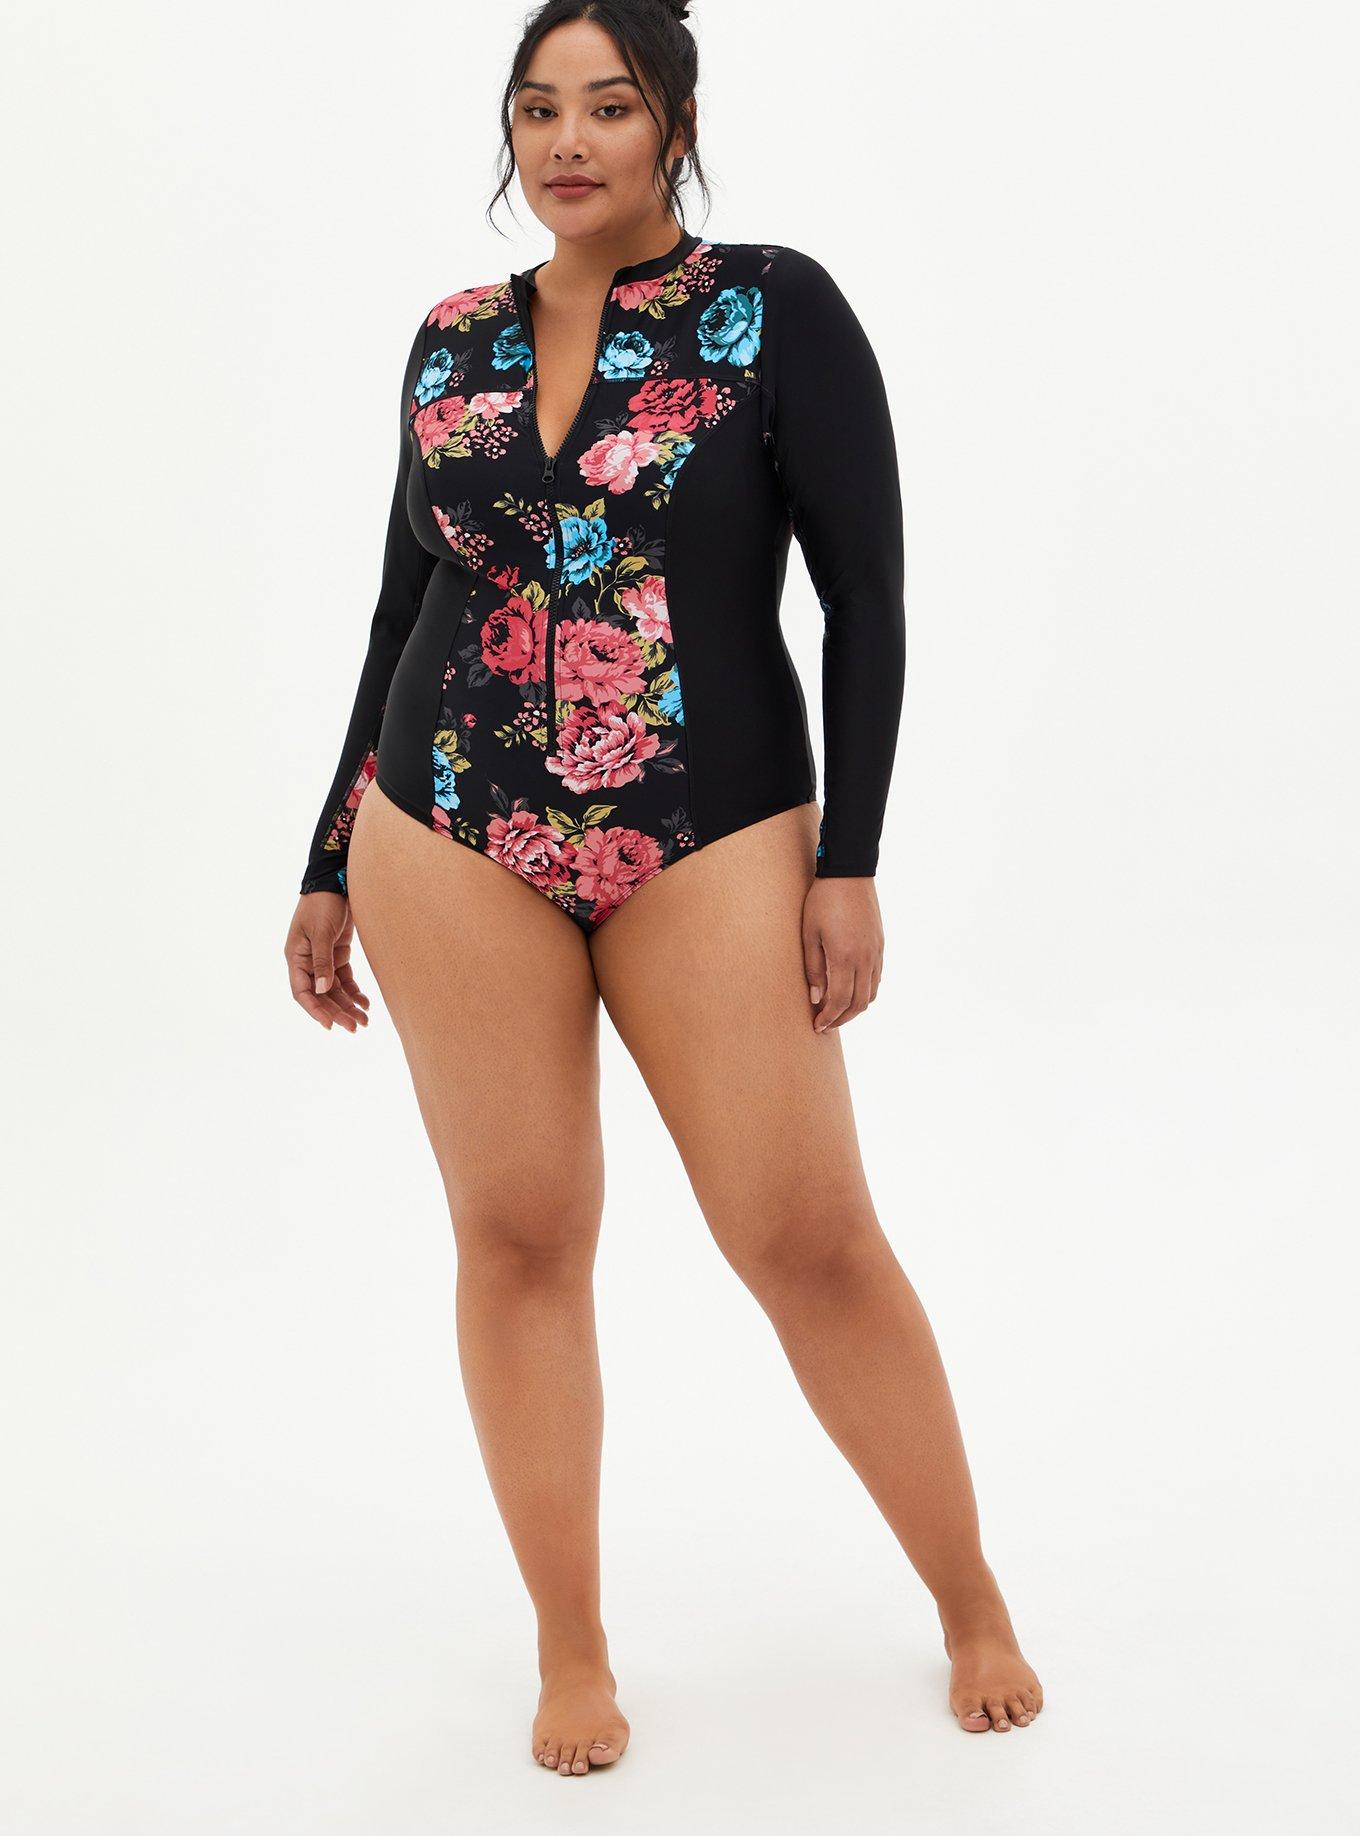 Cheetah Bikini,Swimsuits by Cup Size,one Piece Rash Guard